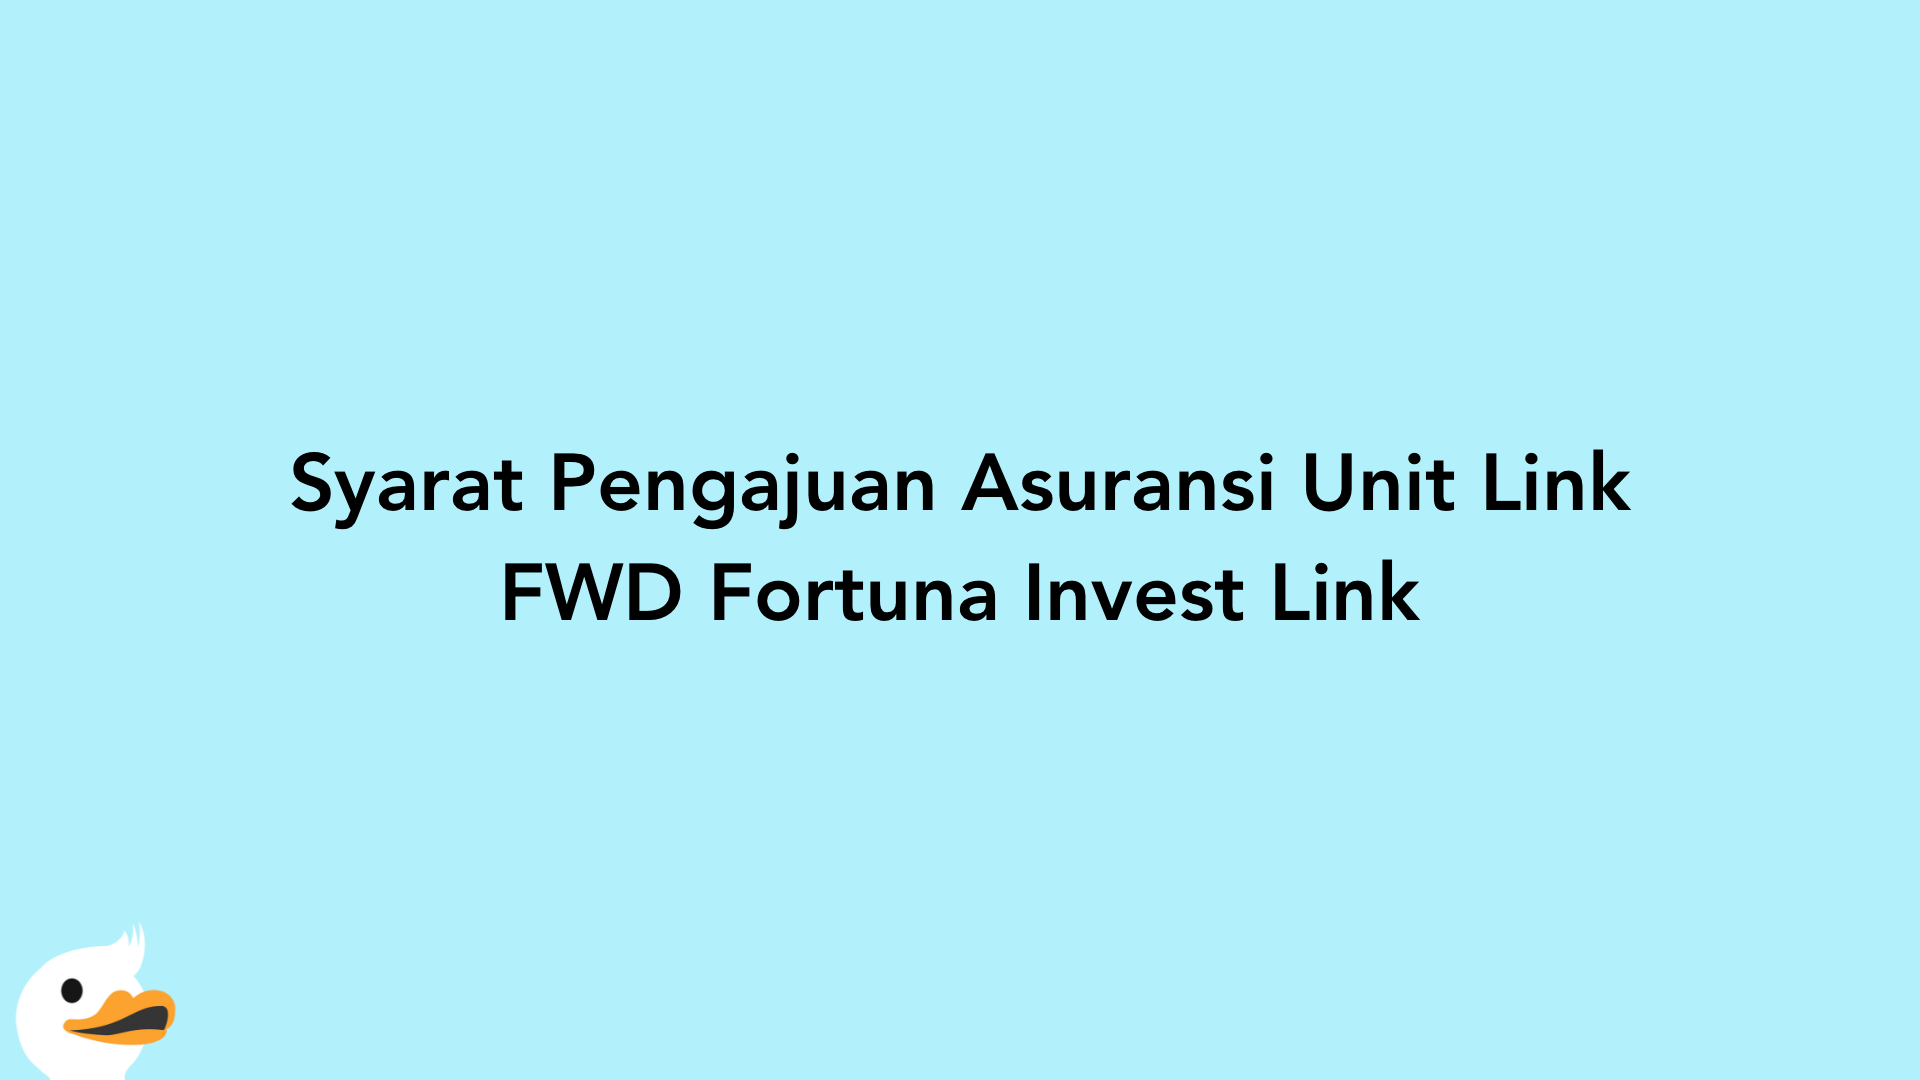 Syarat Pengajuan Asuransi Unit Link FWD Fortuna Invest Link